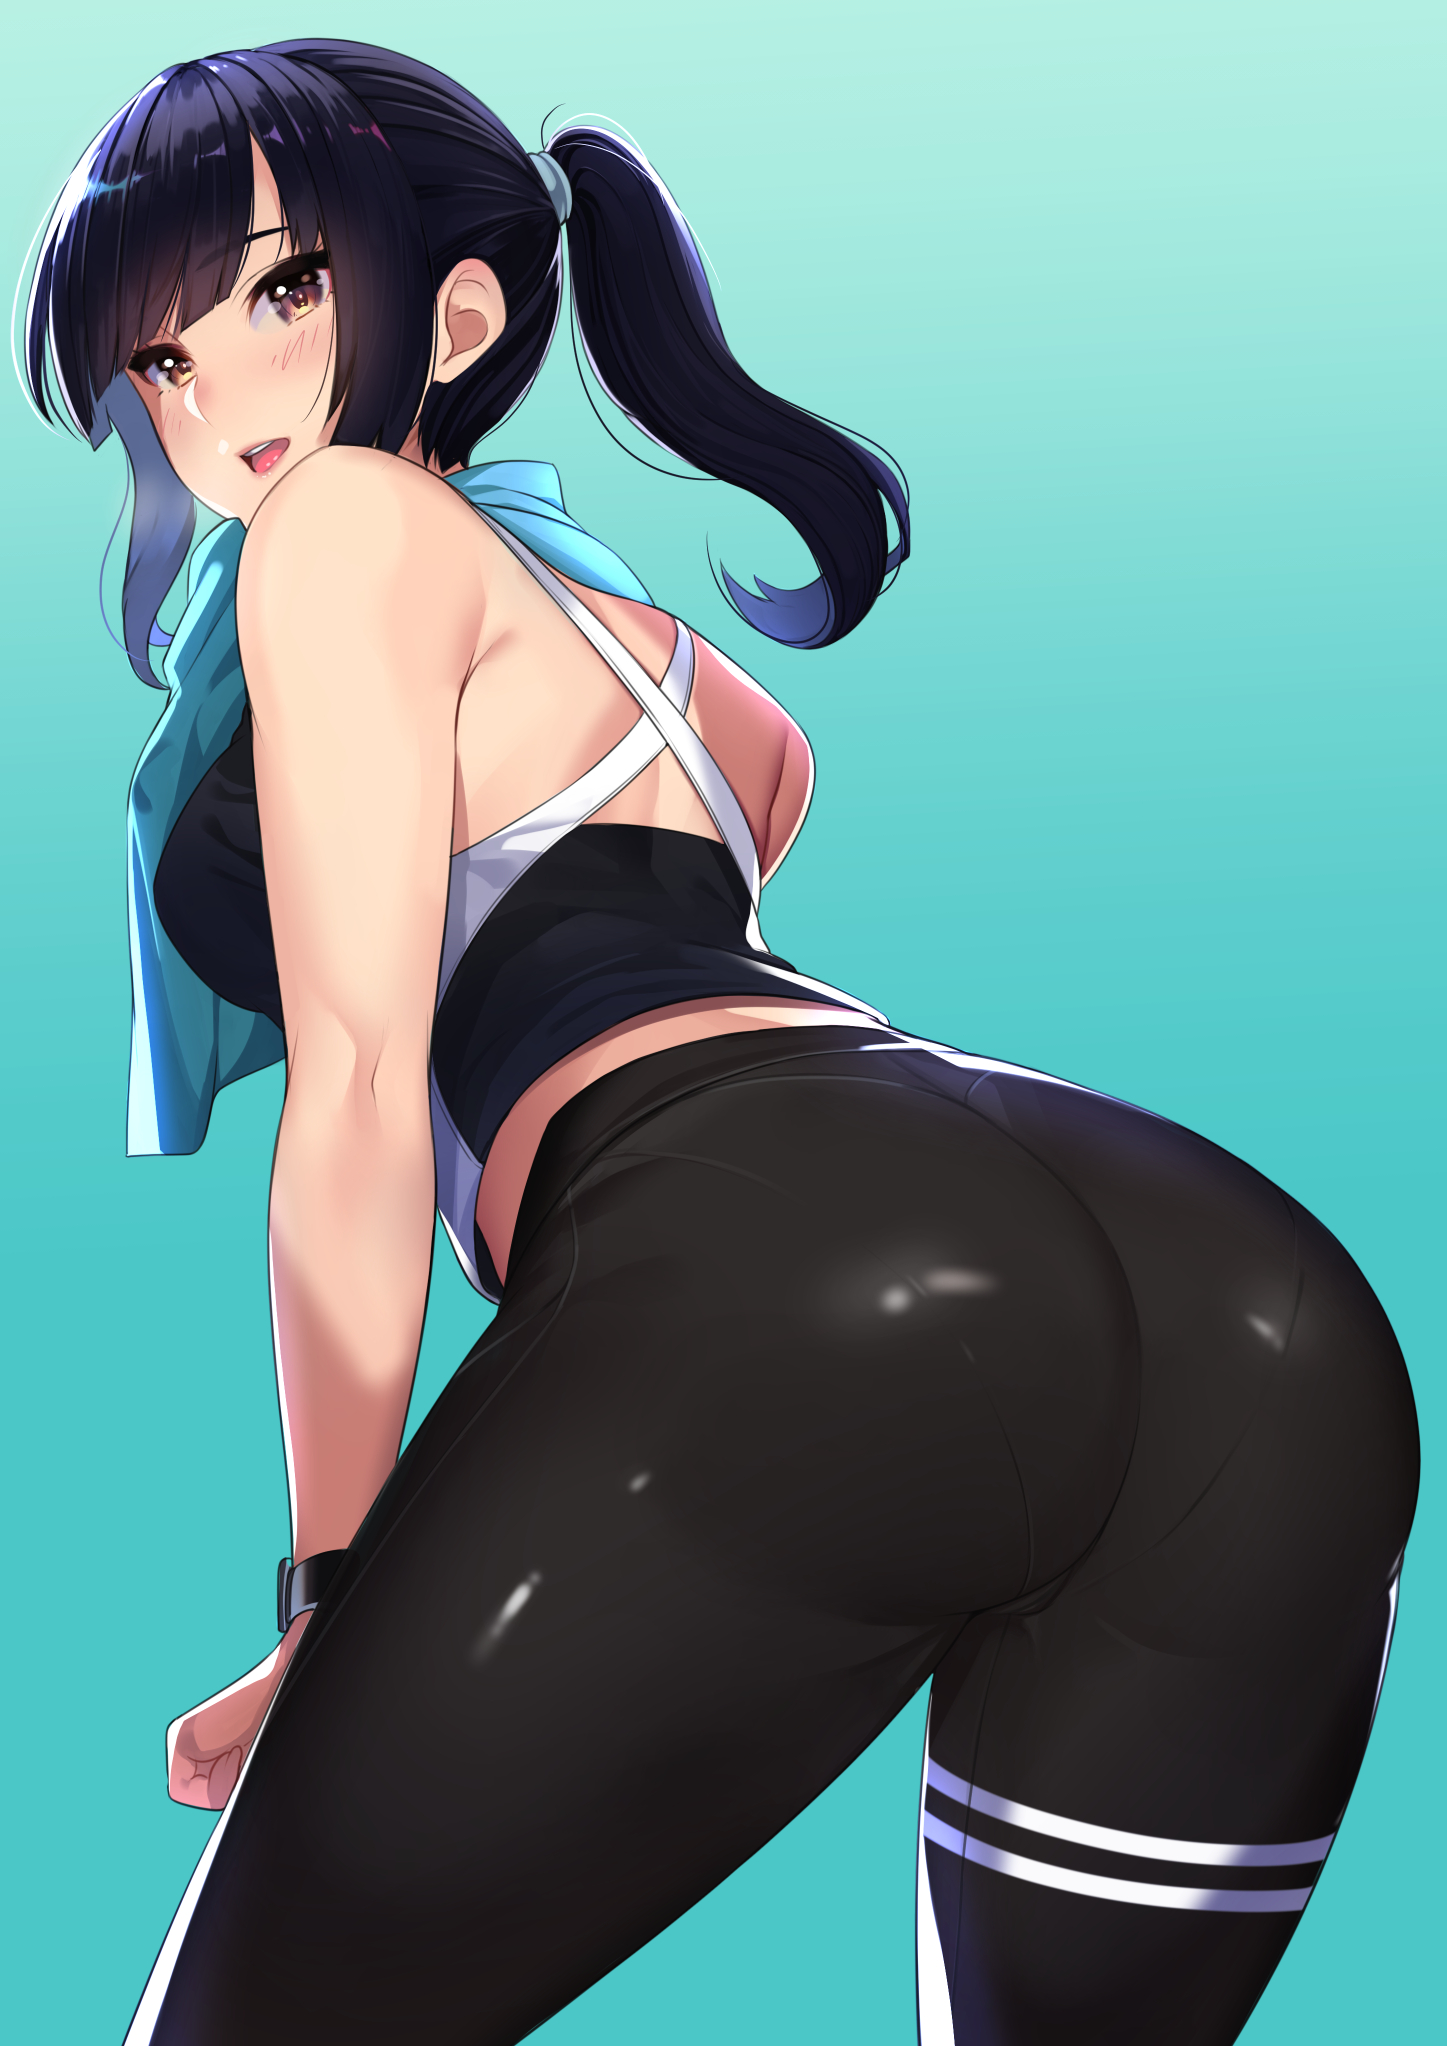 Anime 1447x2046 anime anime girls cameltoe ass gym clothes Kagematsuri cyan background cyan tight clothing